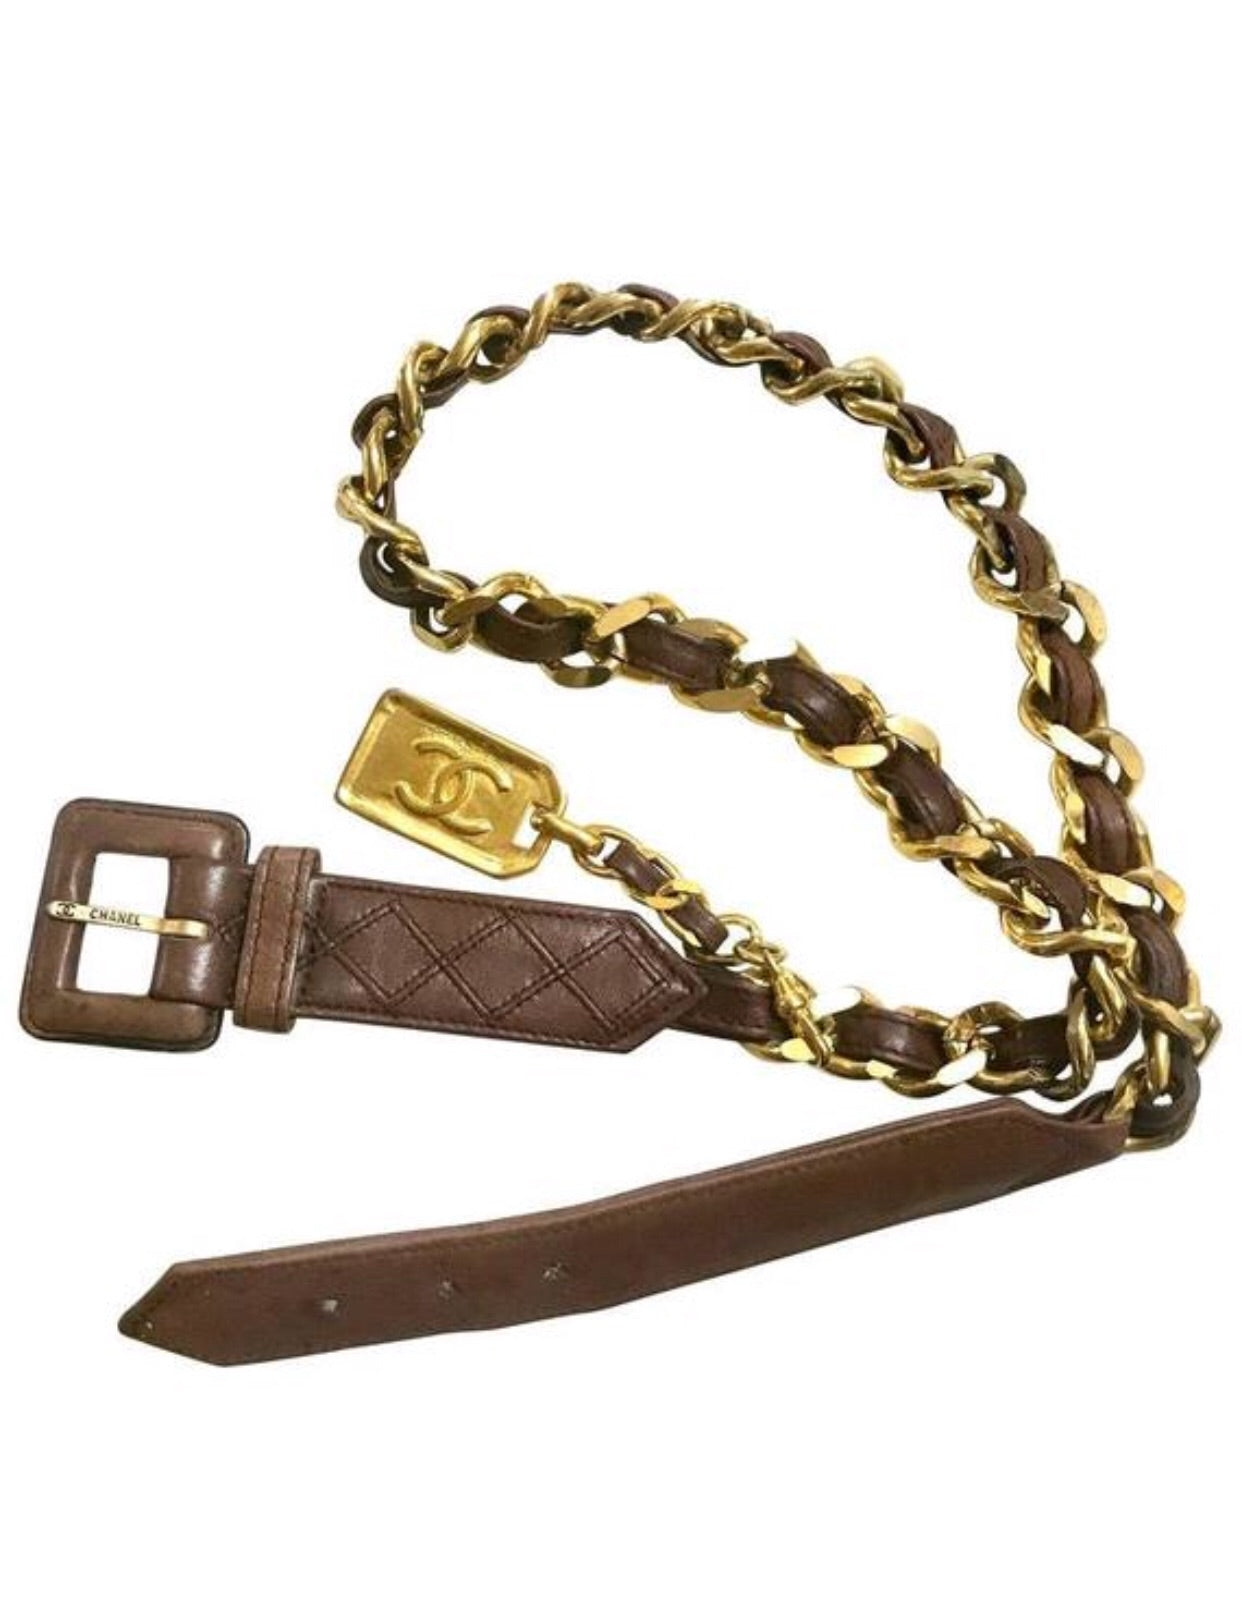 Chanel - Vintage 1980's Black Leather and Gold Buckle CC Link Belt - 75 / 30